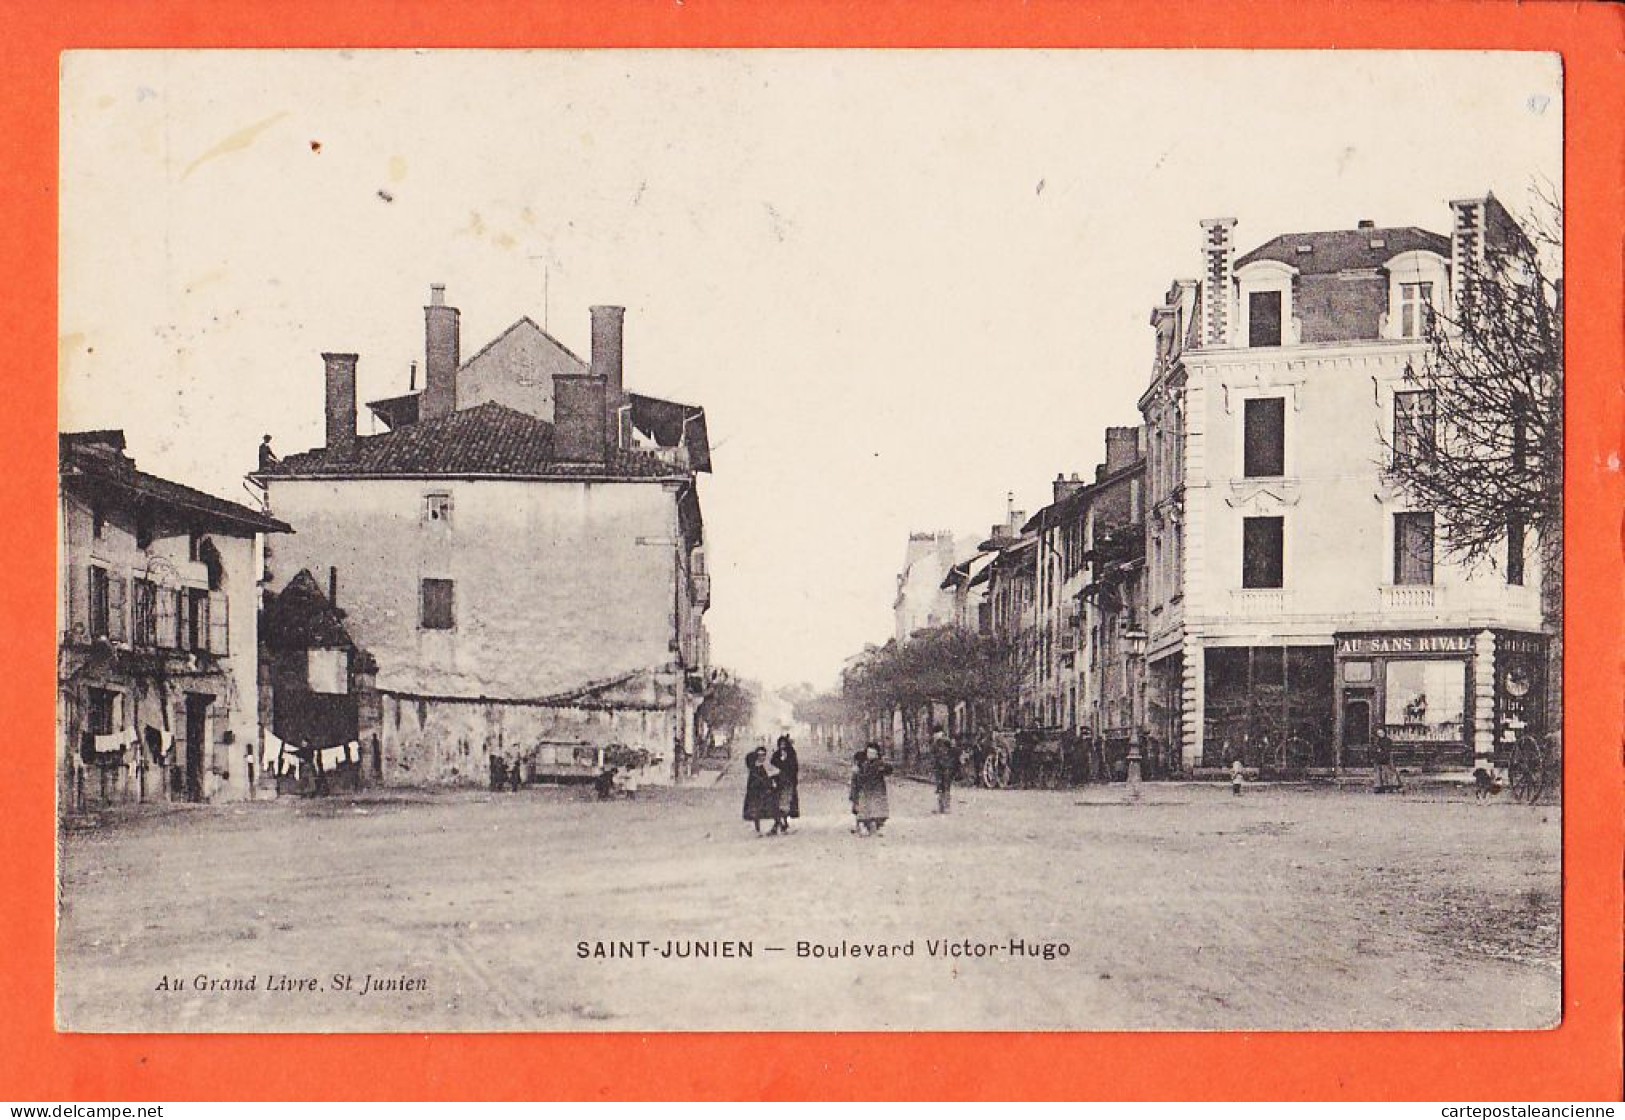 00870 / ⭐ SAINT-JUNIEN 87-Haute Vienne Au SANS RIVAL Boulevard Victor HUGO 1905 à RAISSAC Pharmacien Rouffignac St - Saint Junien